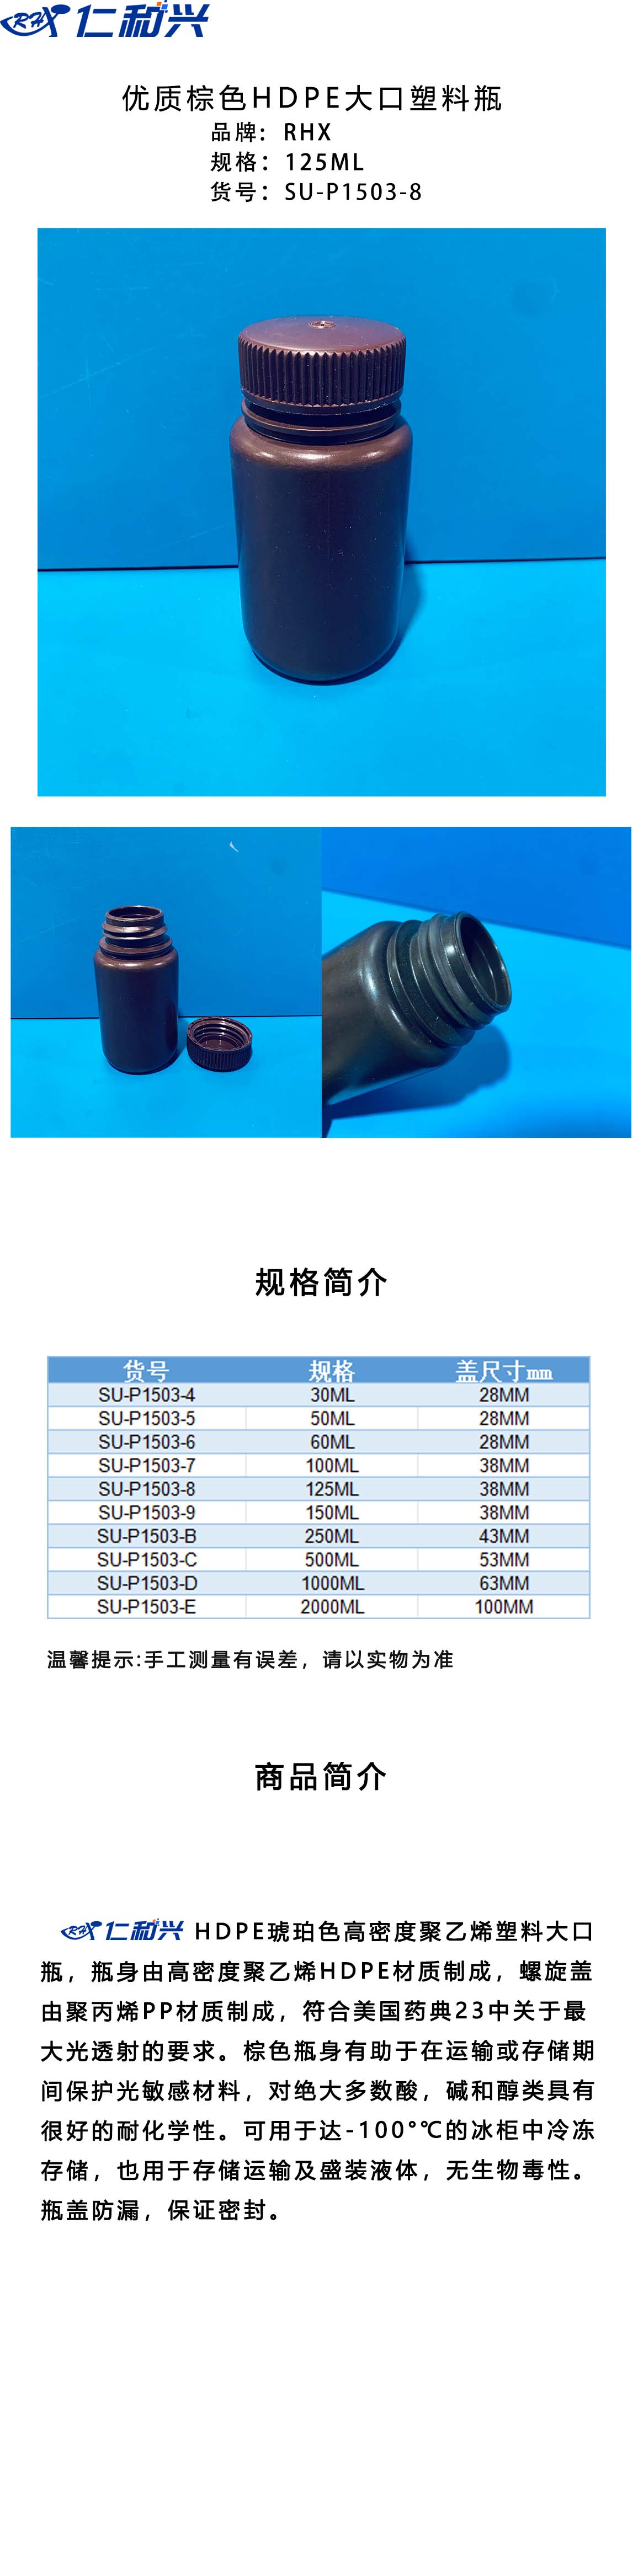 SU-P1503-8 棕色HDPE 大口塑料瓶 长图模板.jpg